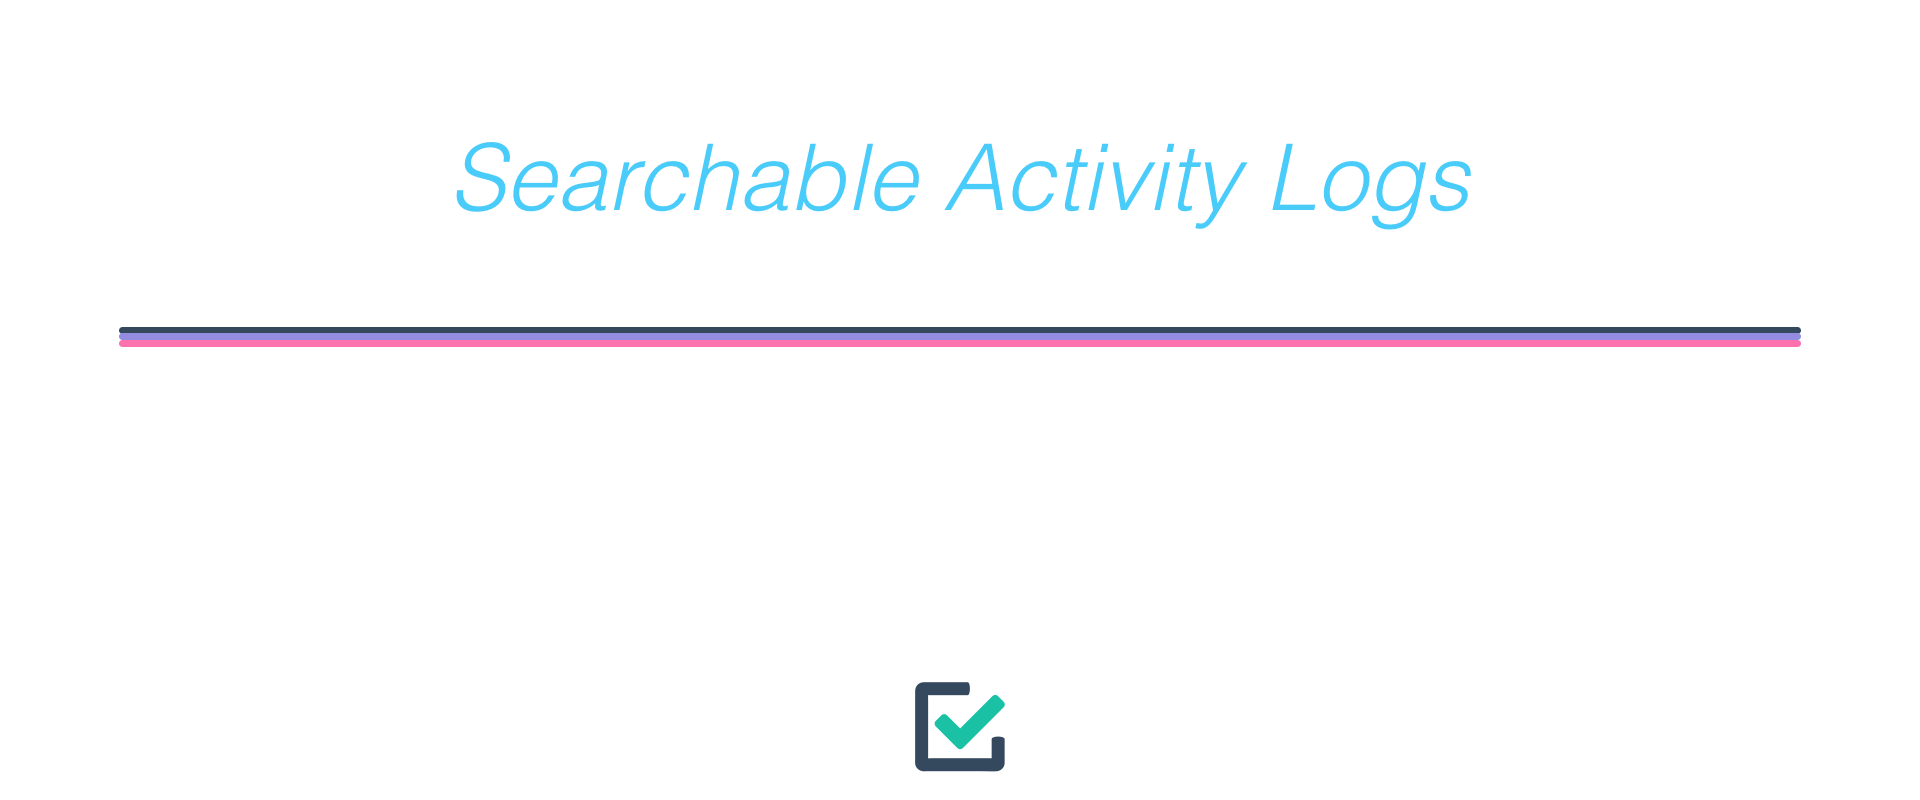 Activity logs